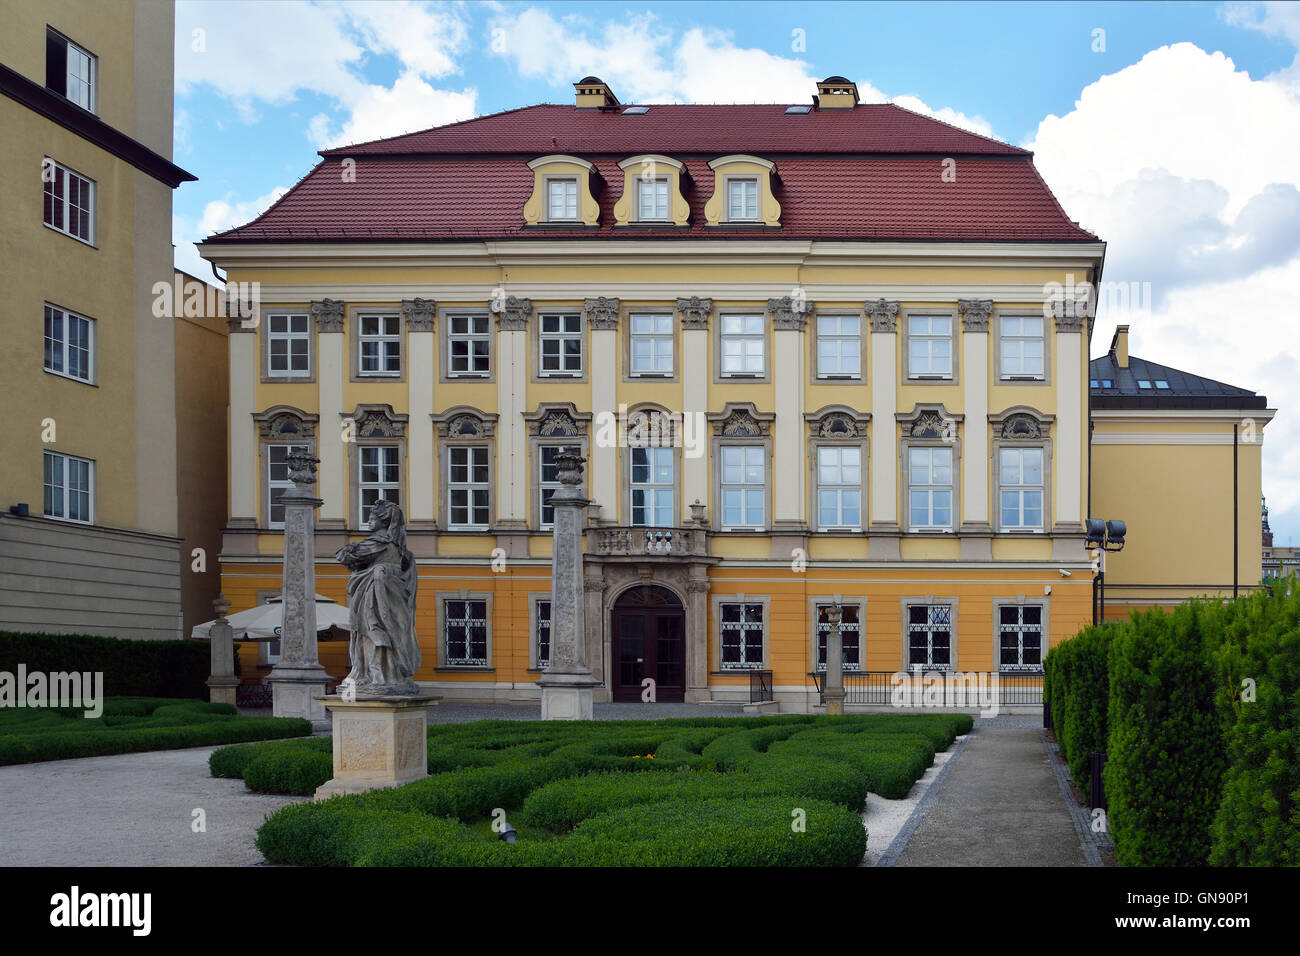 Royal Palace of Wroclaw in Poland - Palac Krolewski. Stock Photo